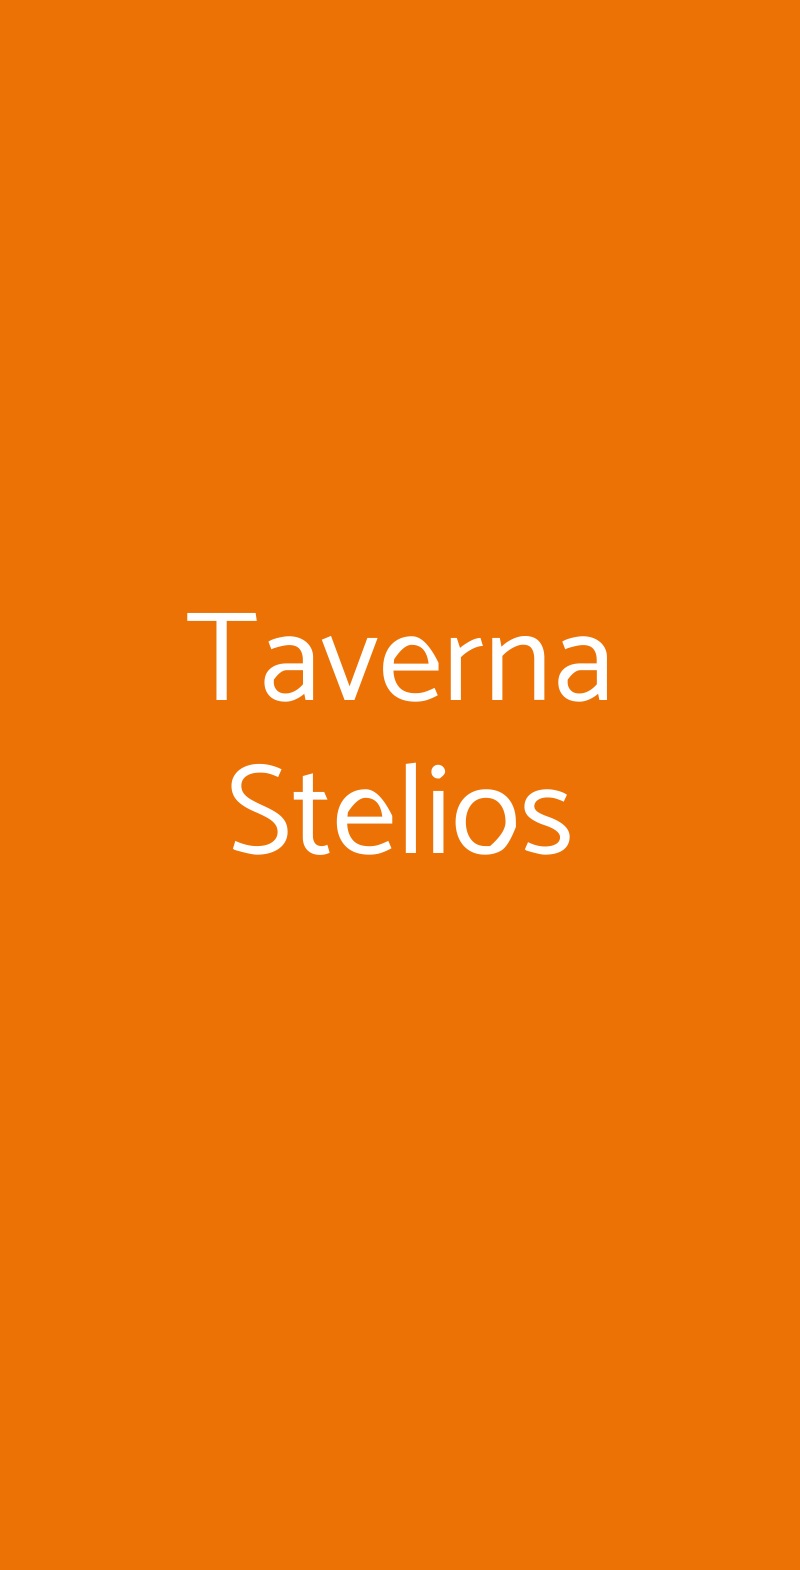 Taverna Stelios Milano menù 1 pagina